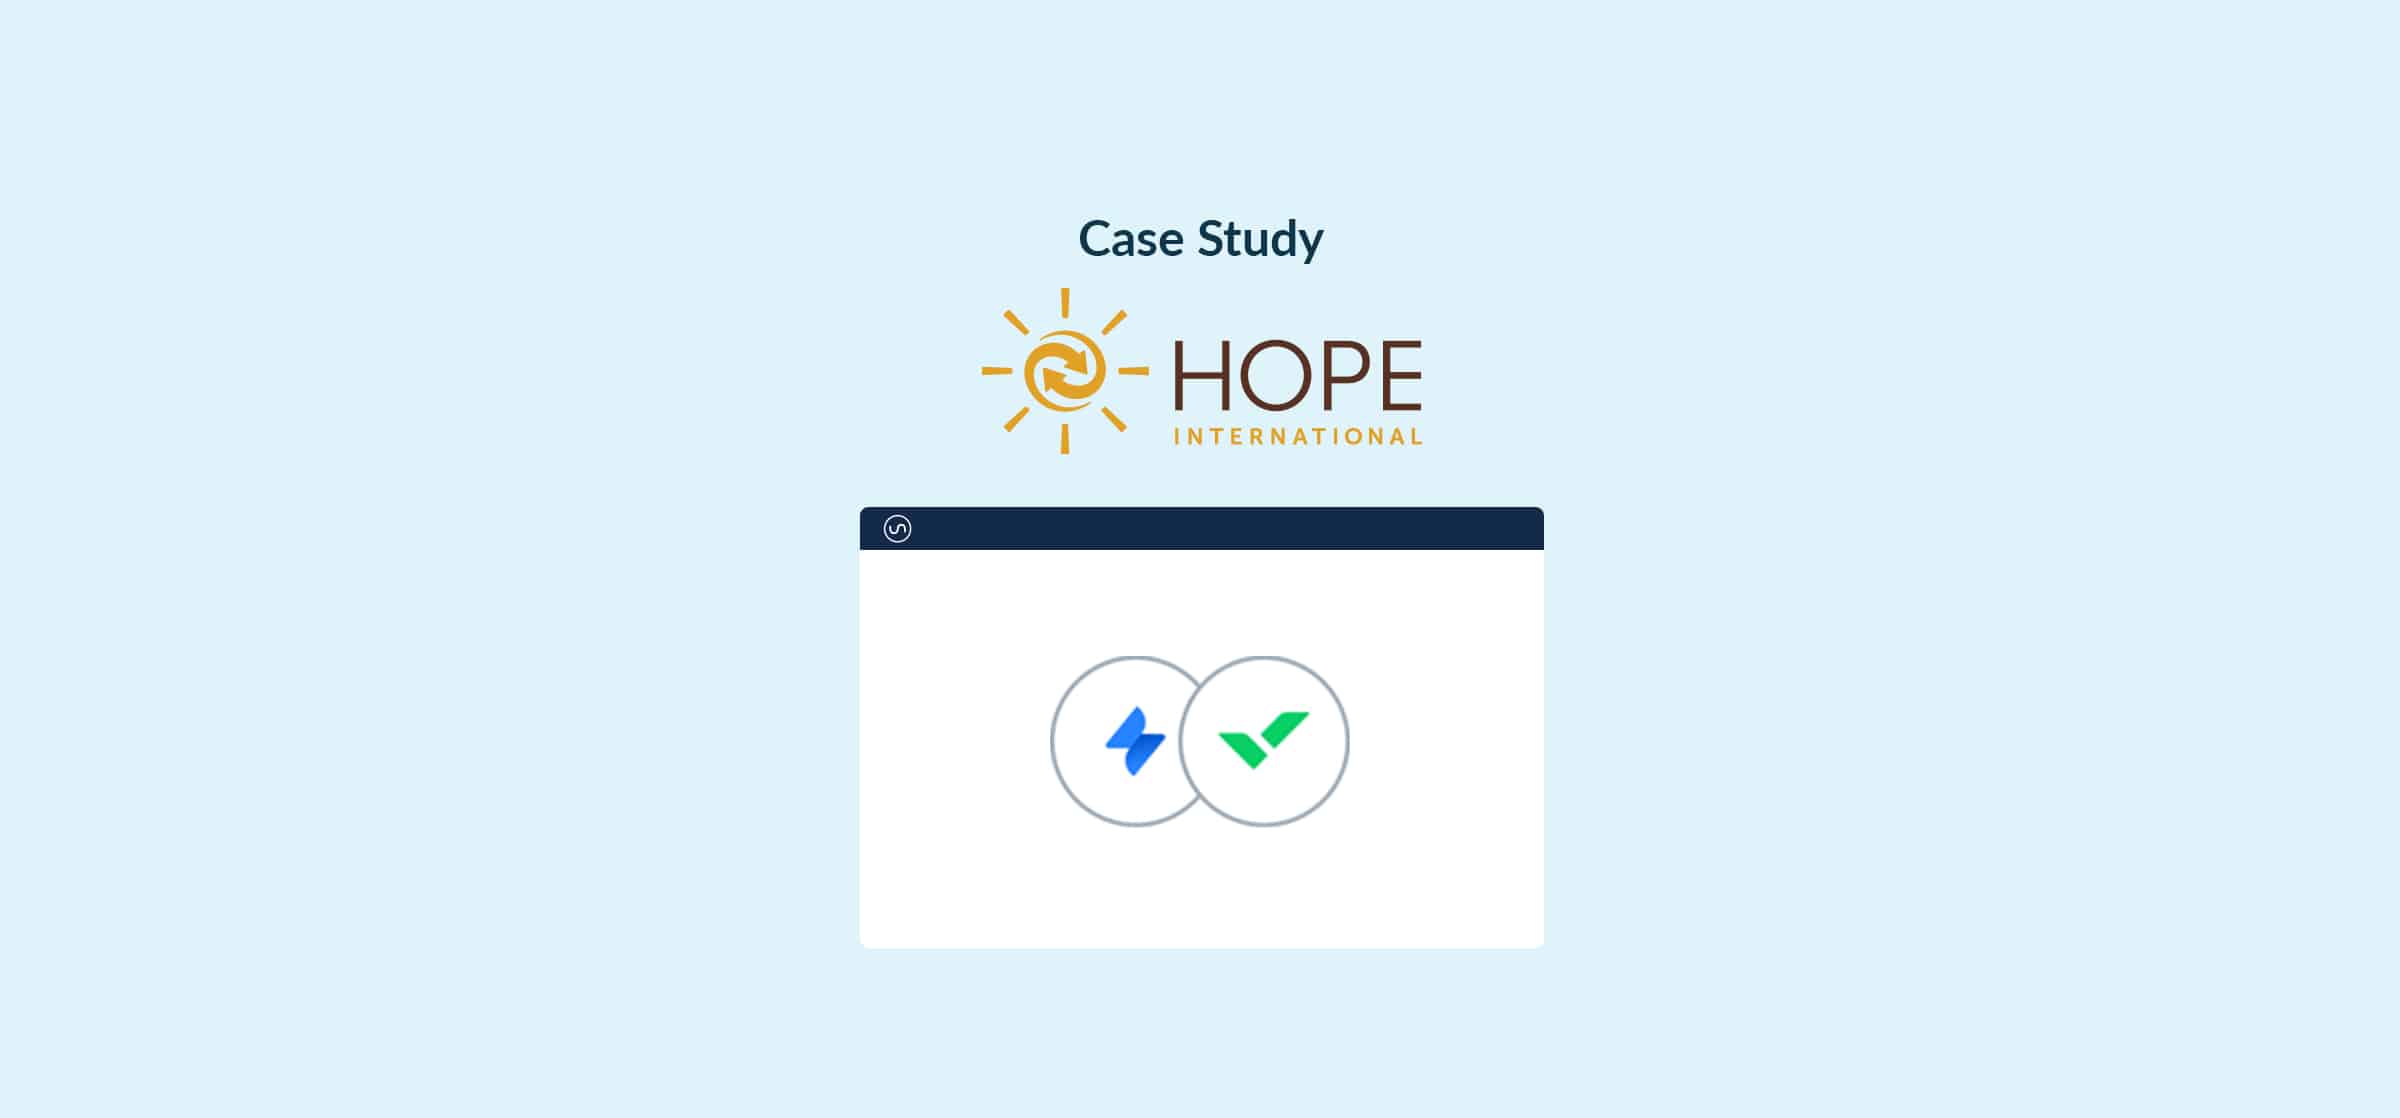 Hope International Case Study